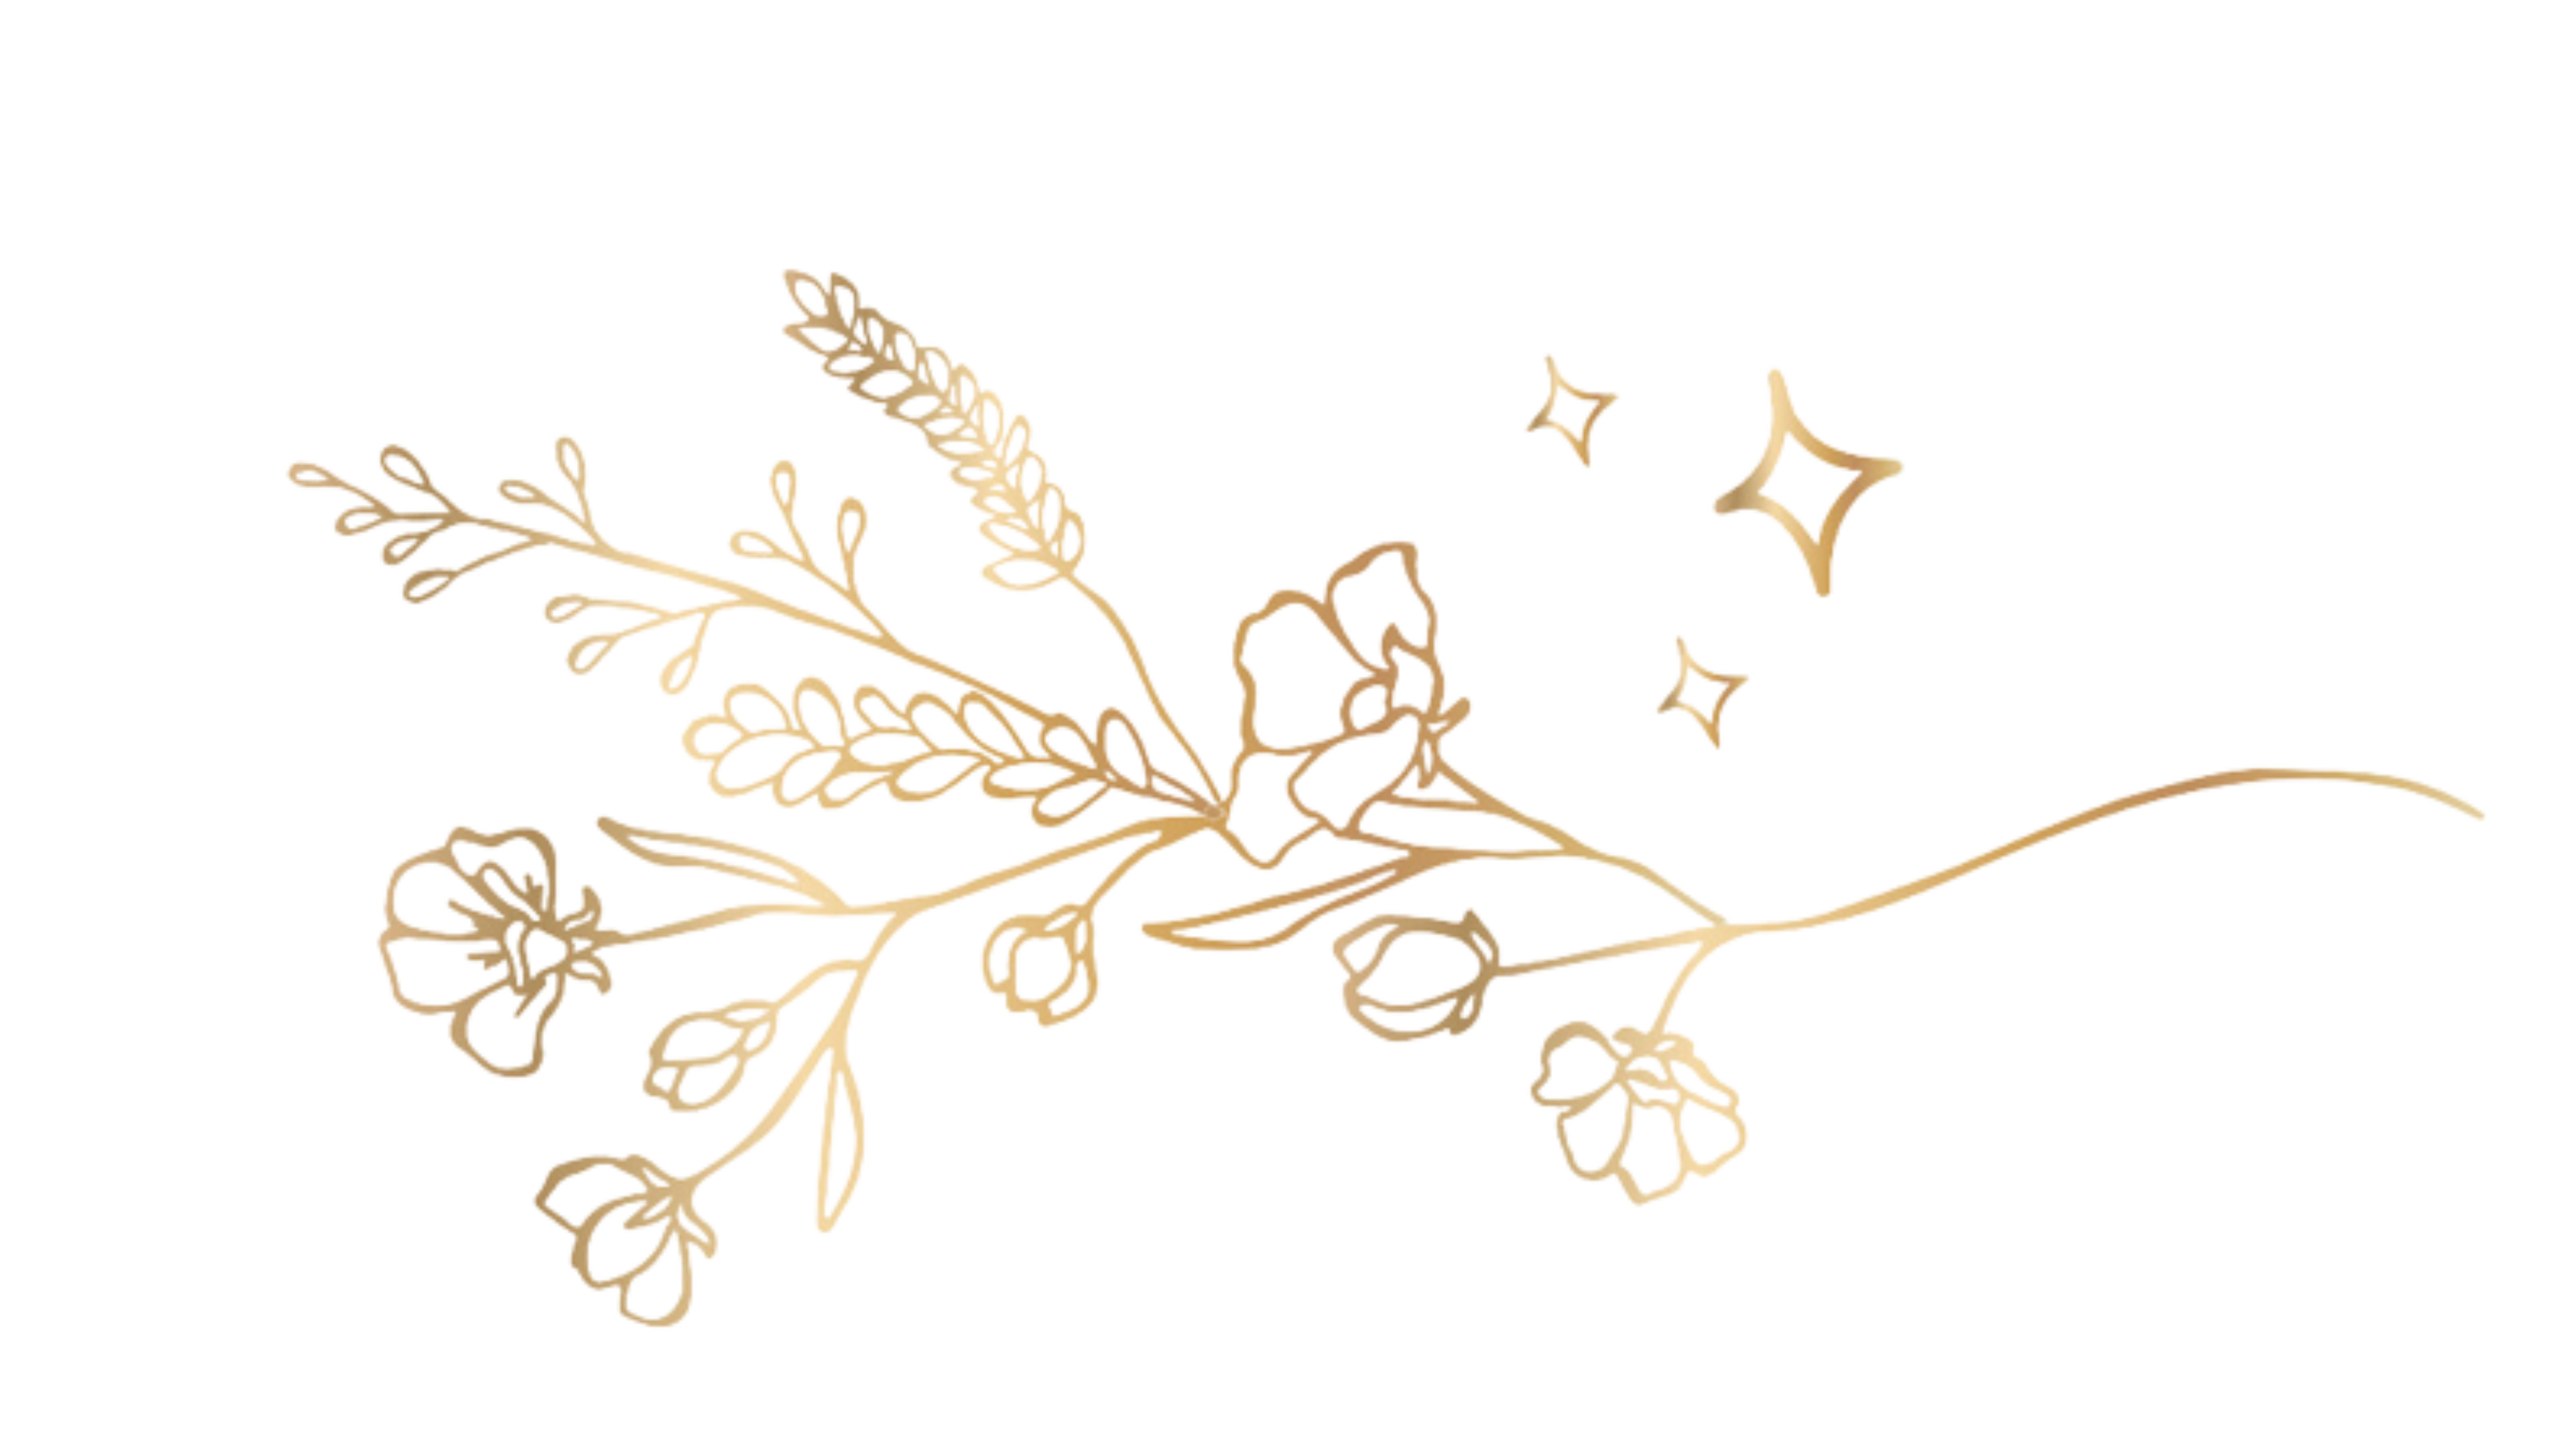 The Wallflower Shoppe